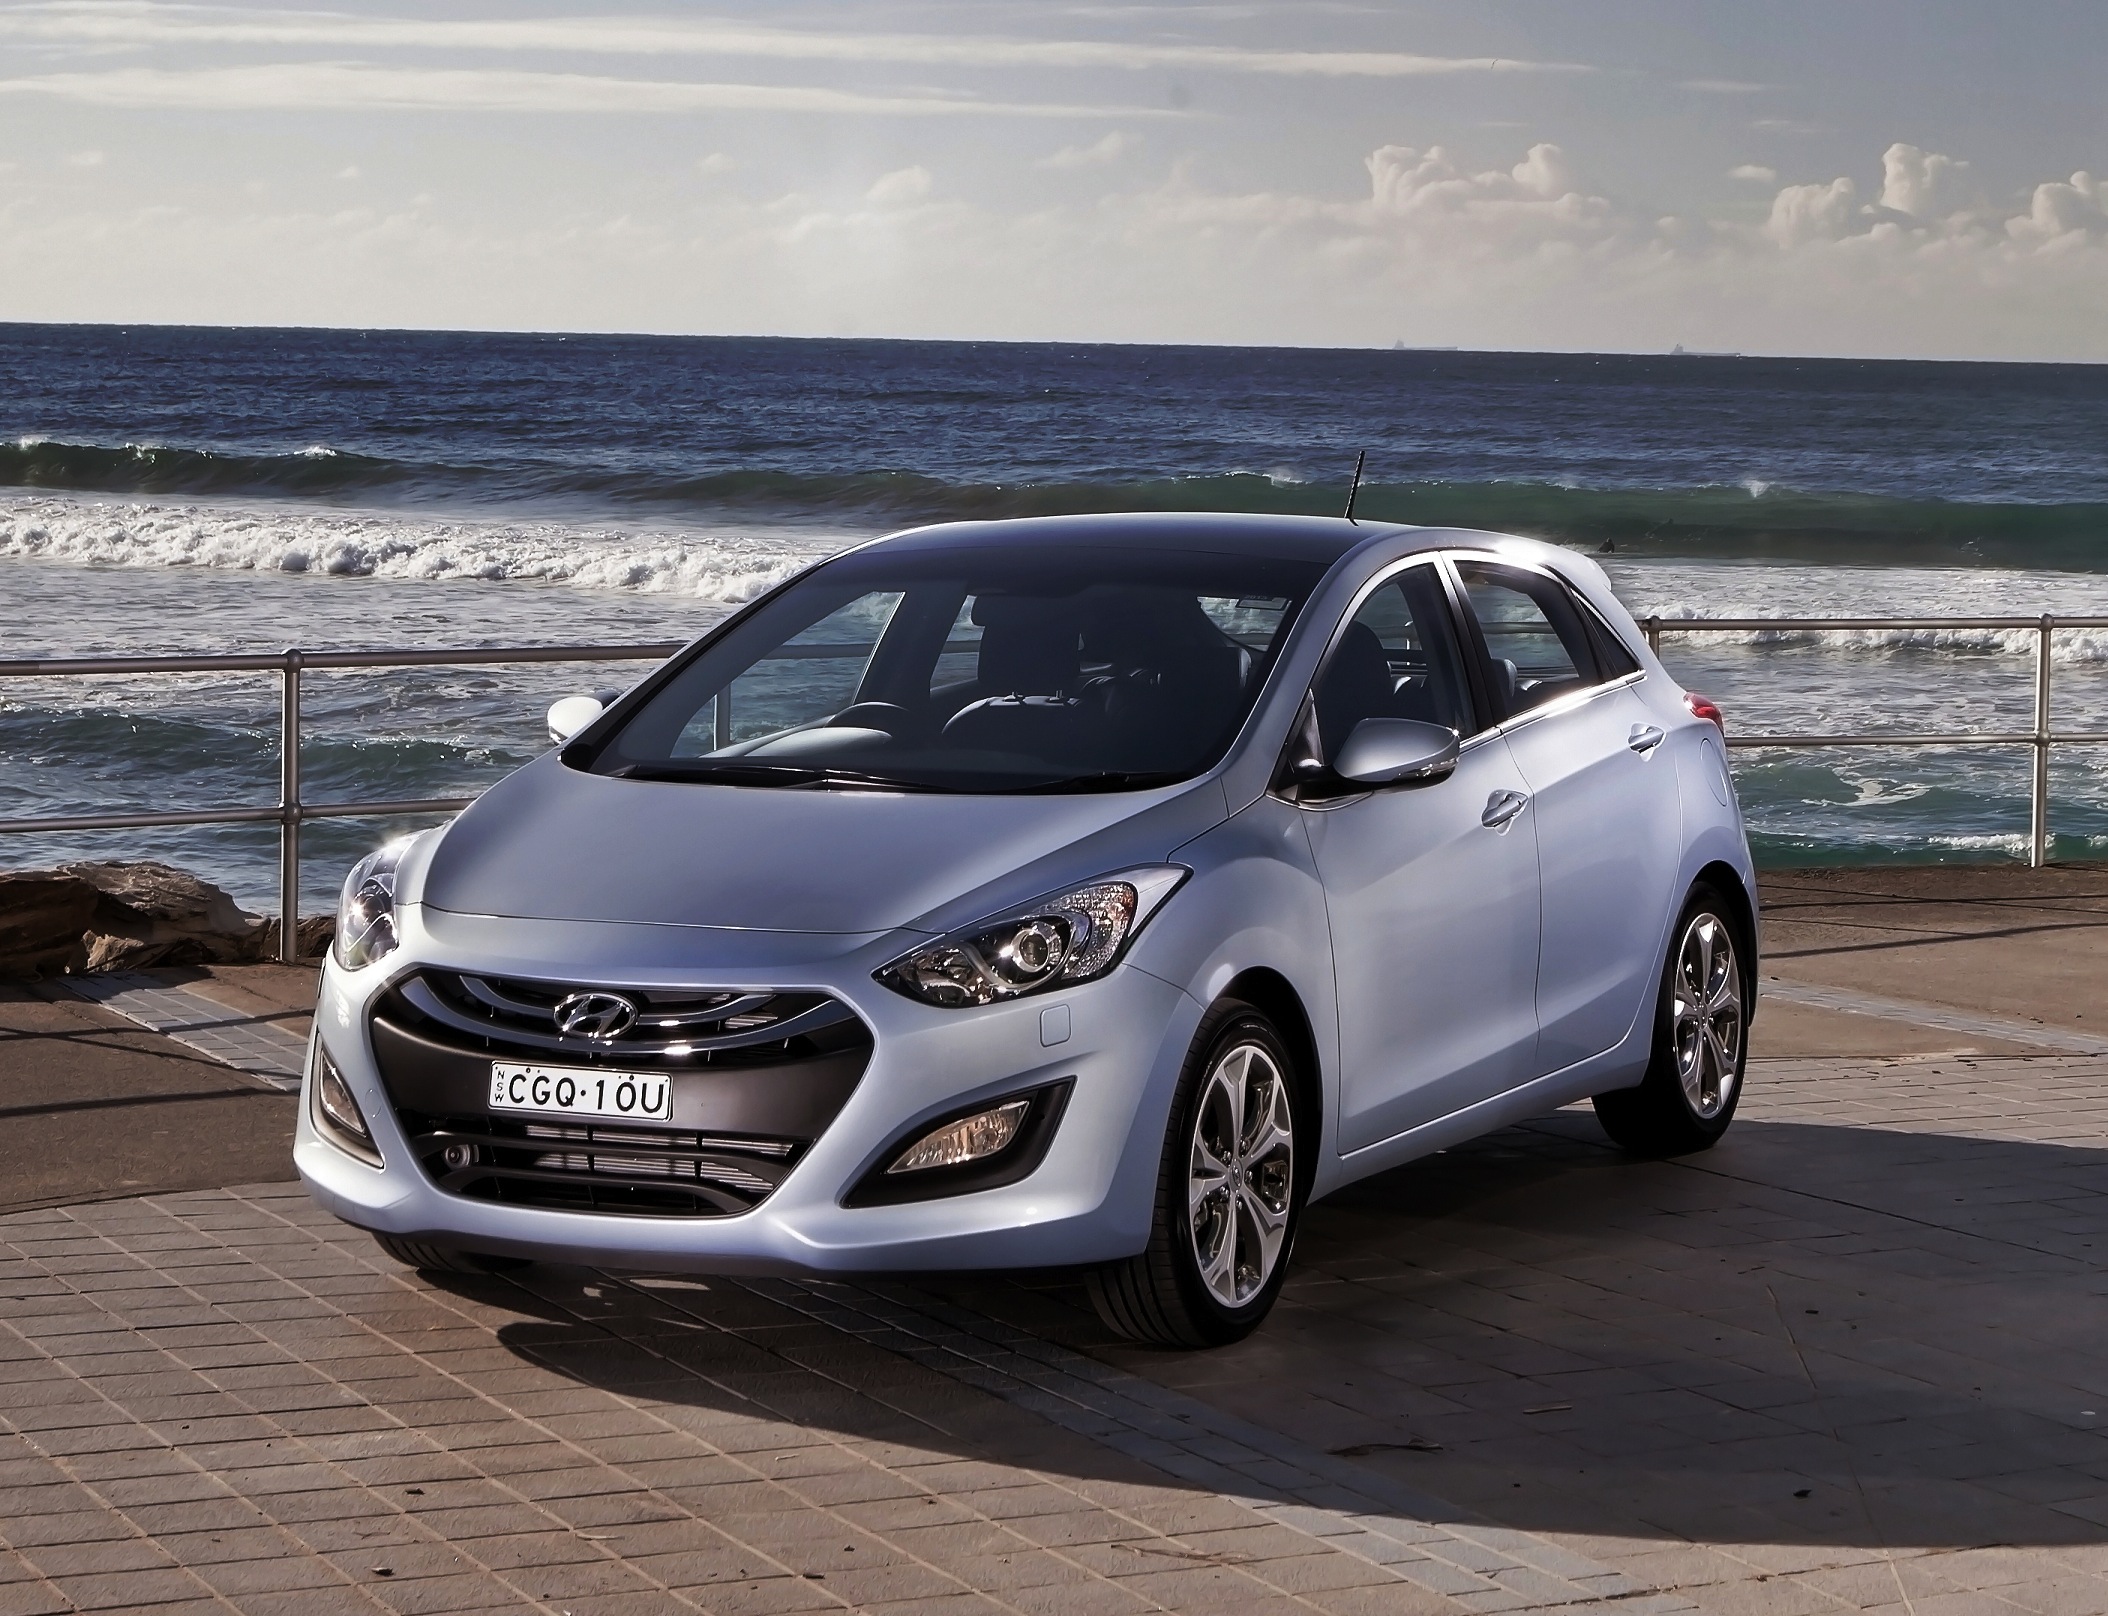 2012 Hyundai i30 now on sale in Australia PerformanceDrive